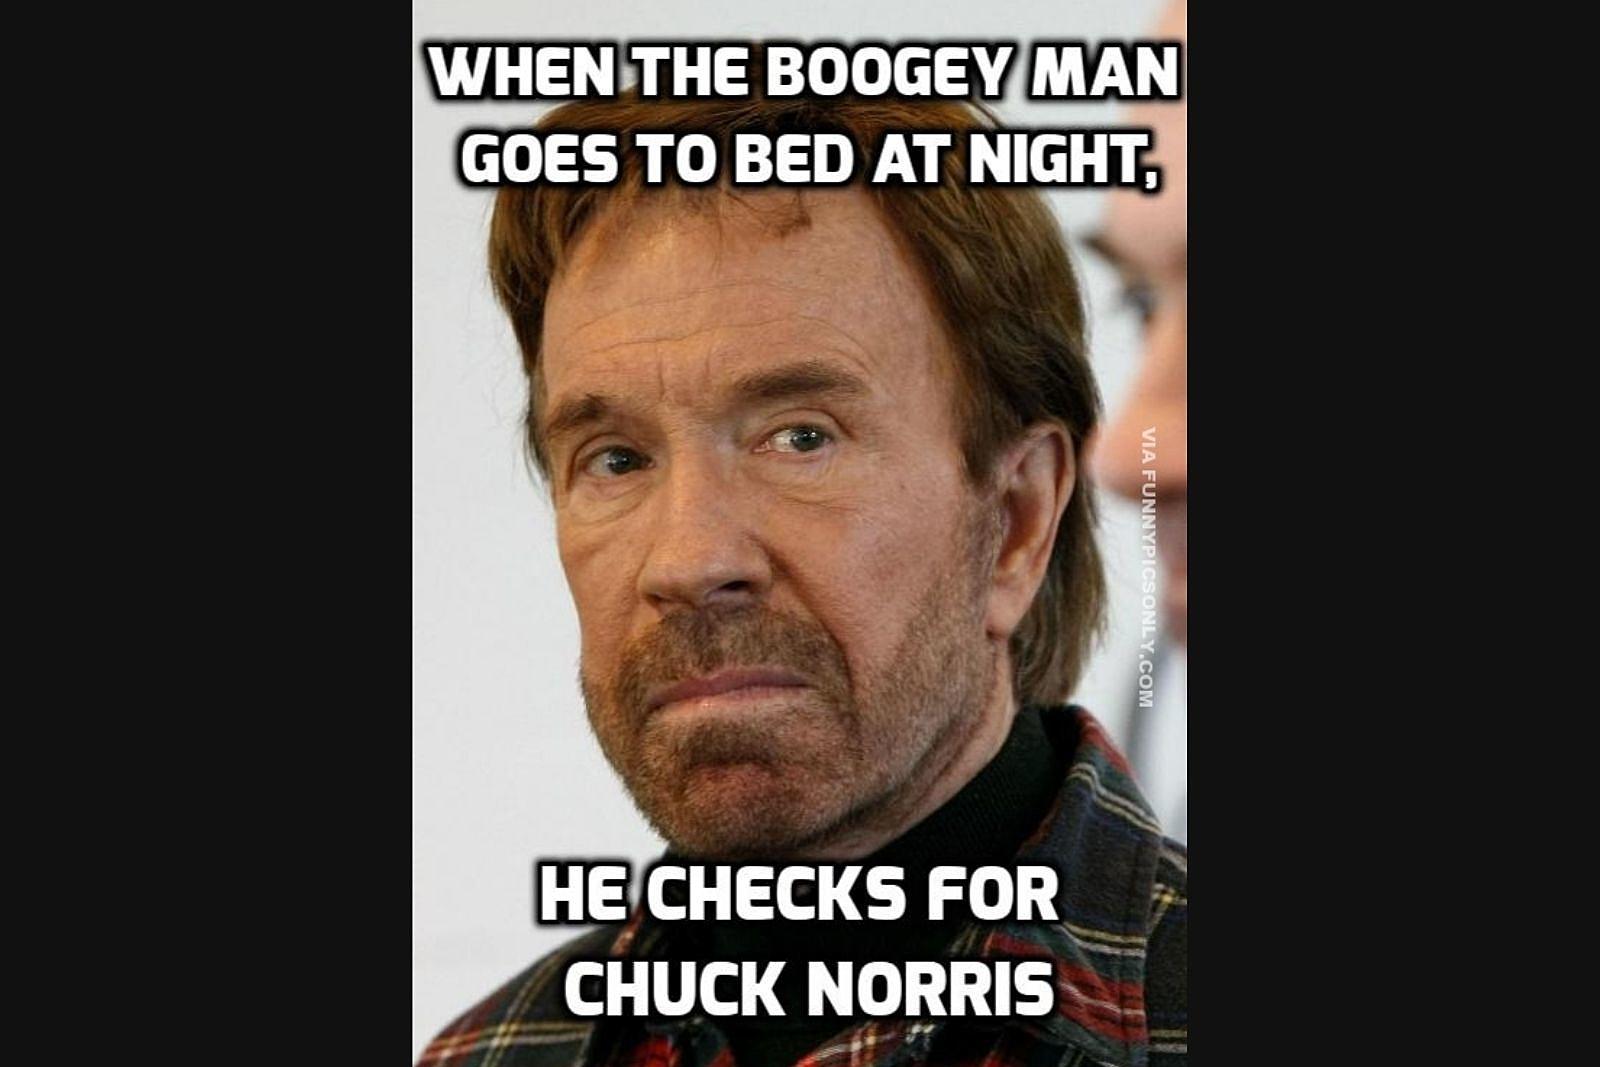 chuck norris beard meme